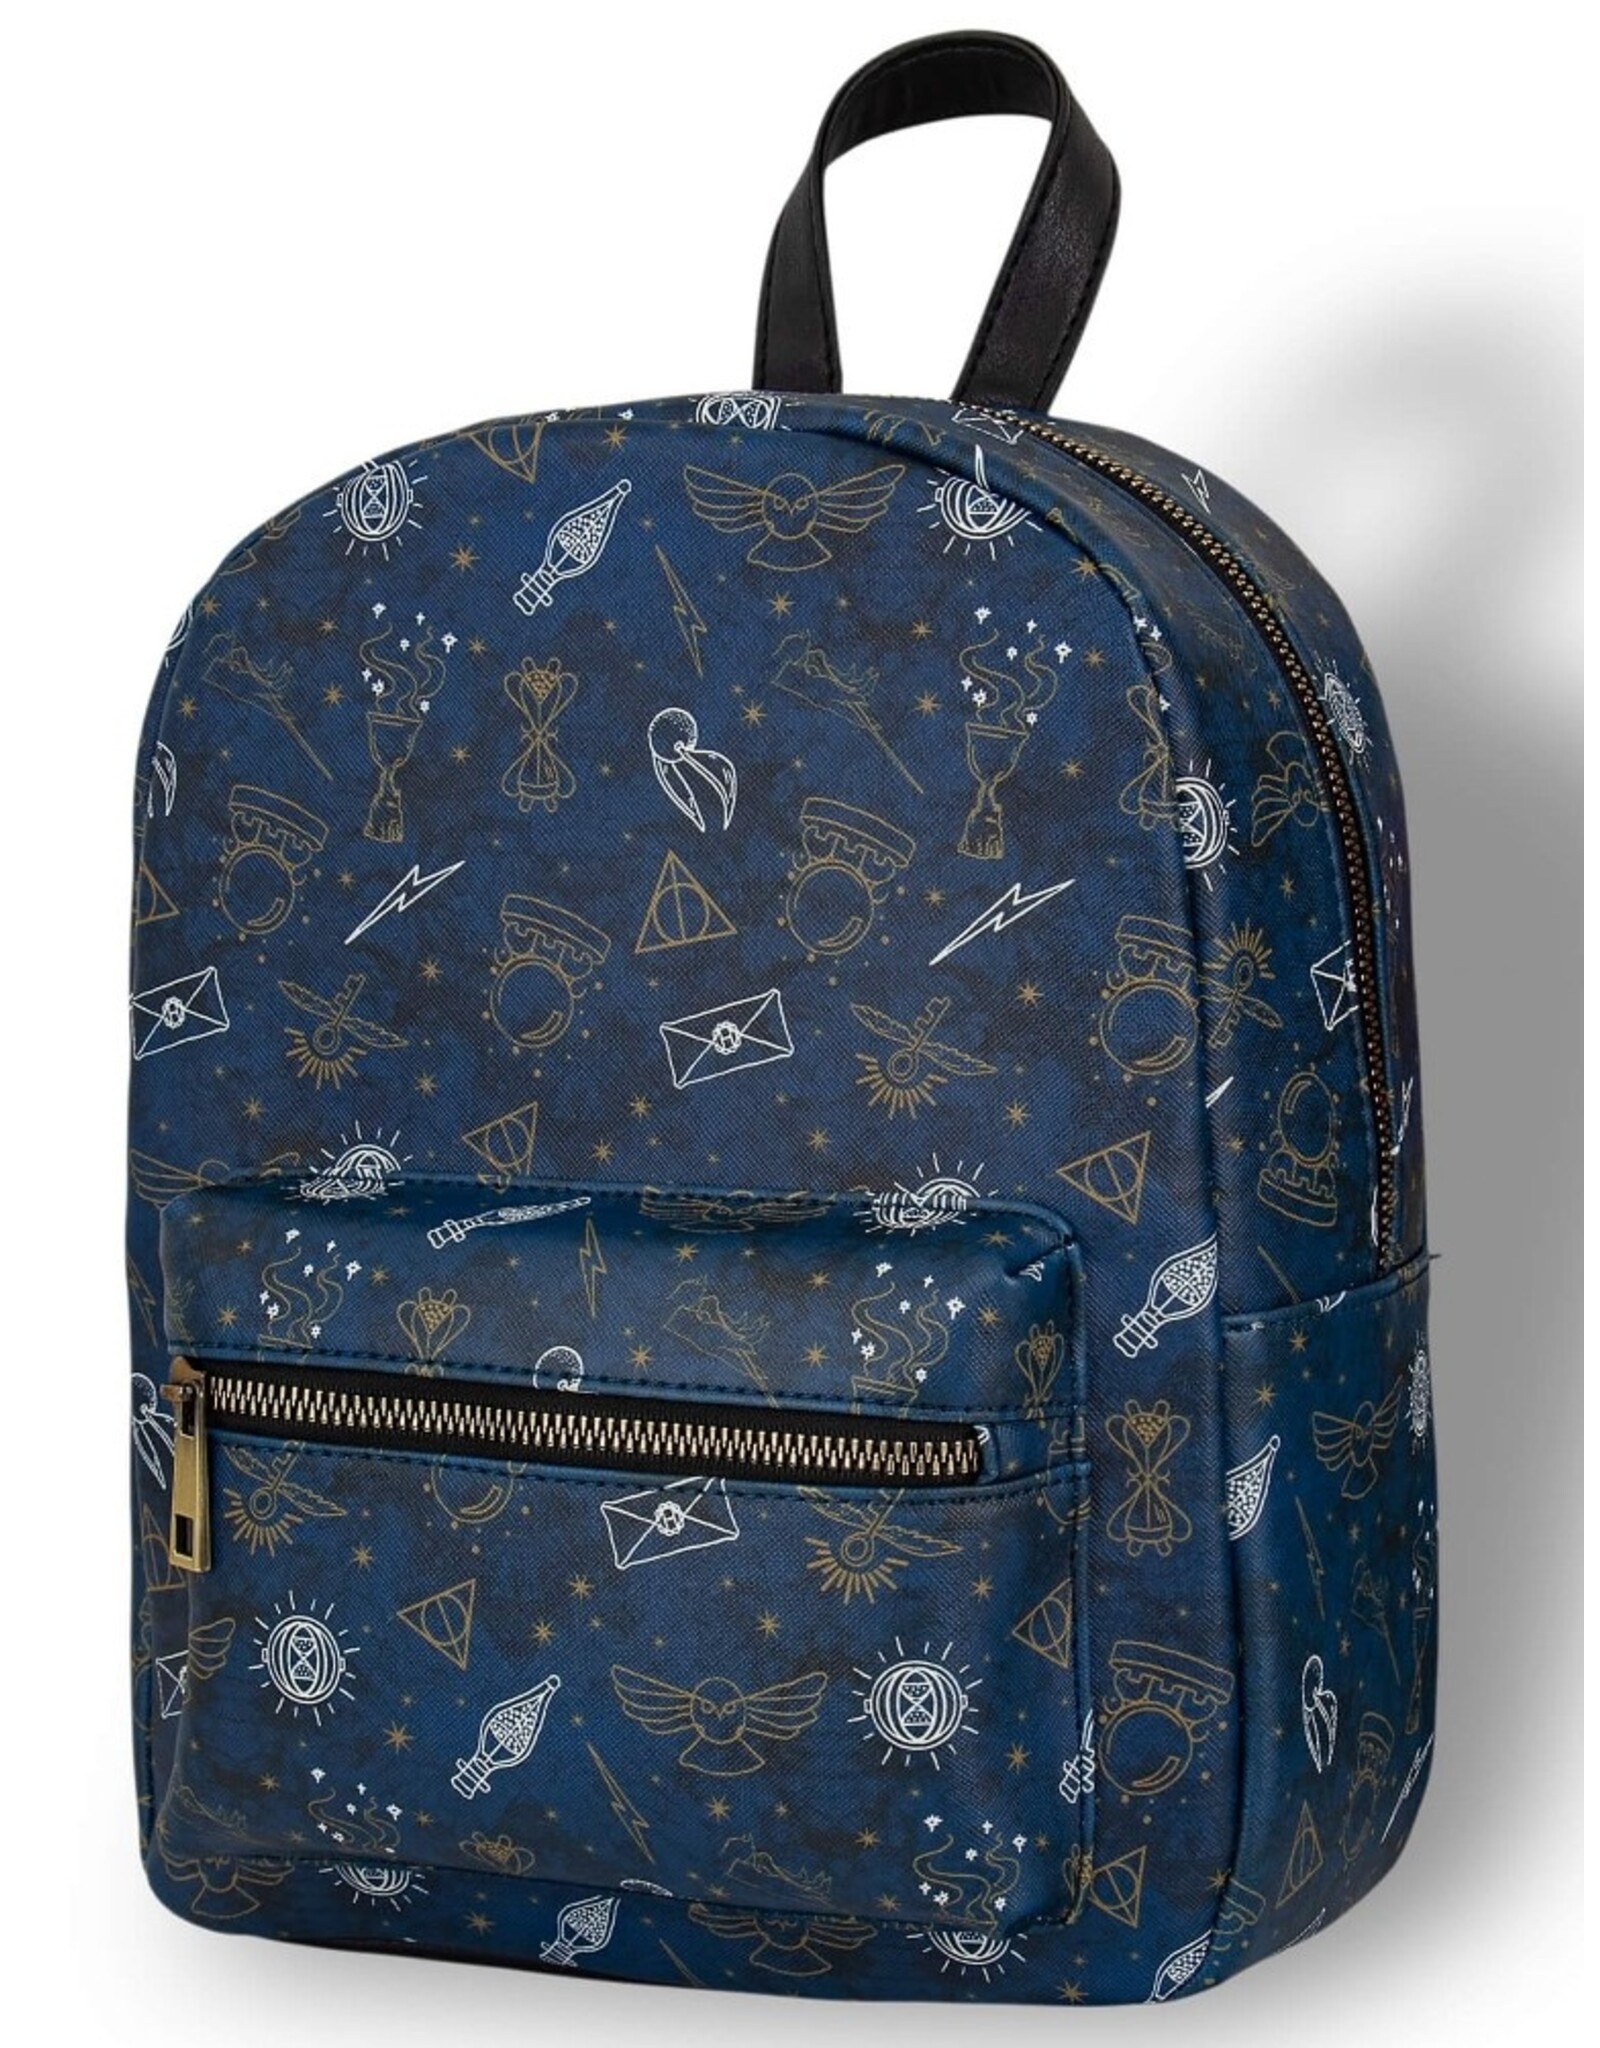 Bioworld Harry Potter bags - Harry Potter Mystical mini backpack 29cm